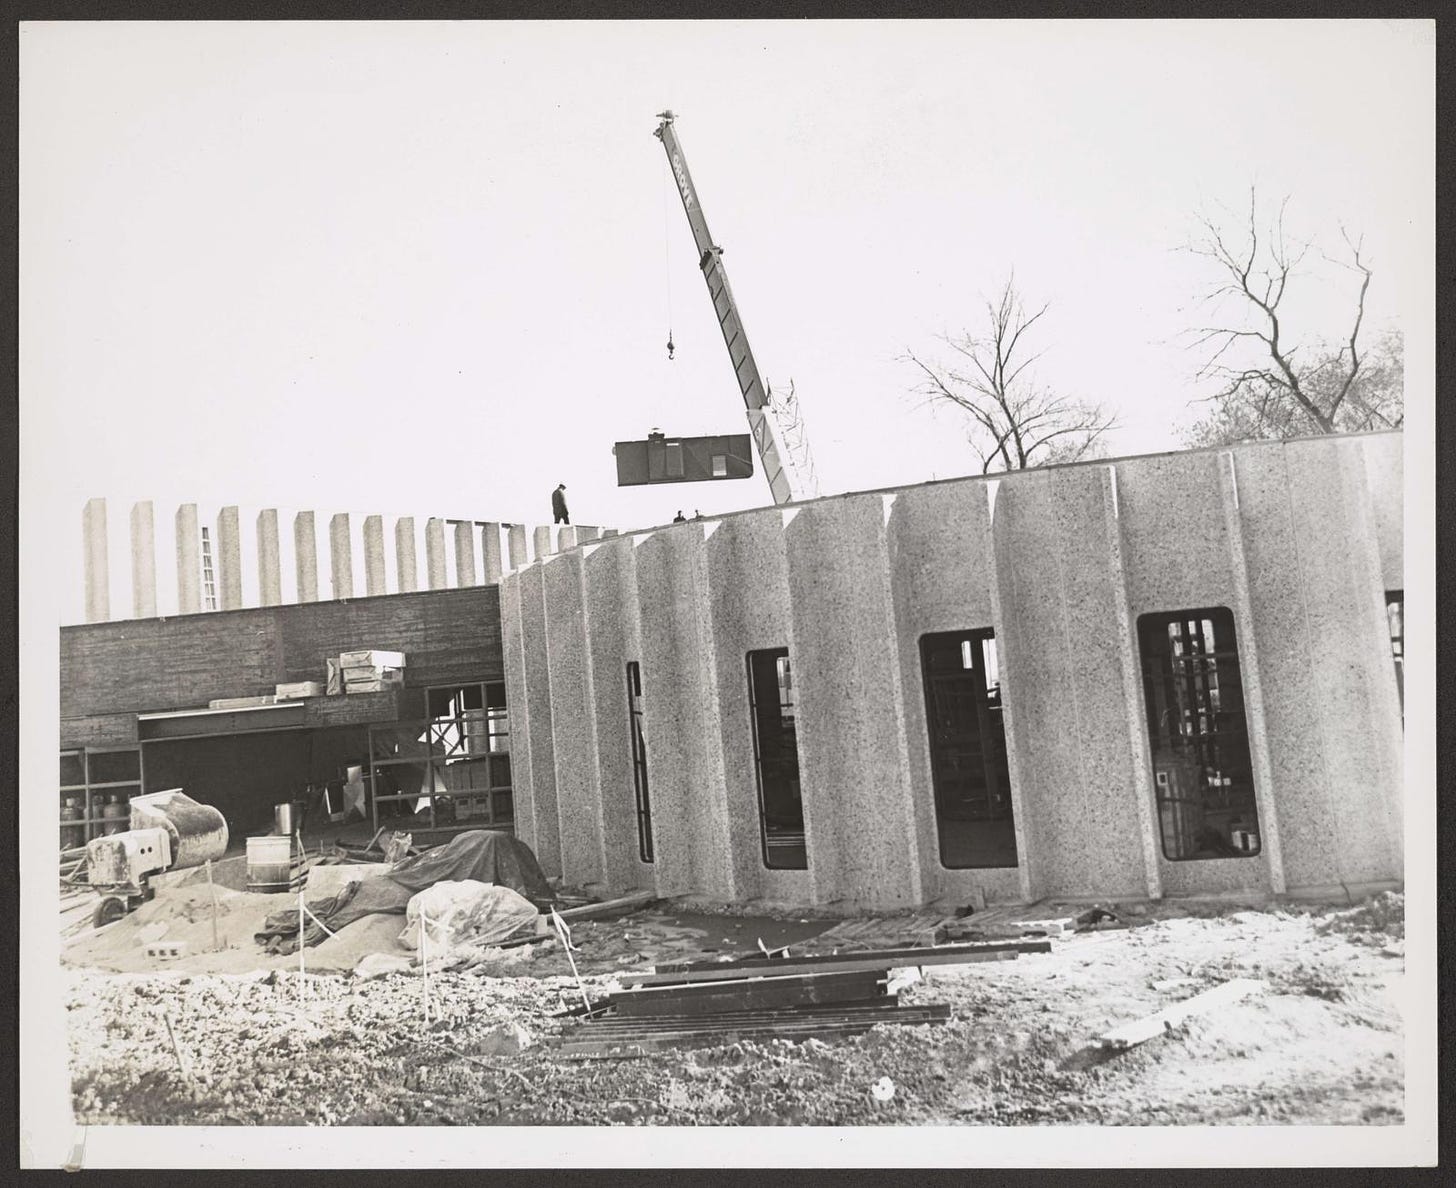 McGuane Park fieldhouse under construction on November 14, 1973. Via Chicago Collections.